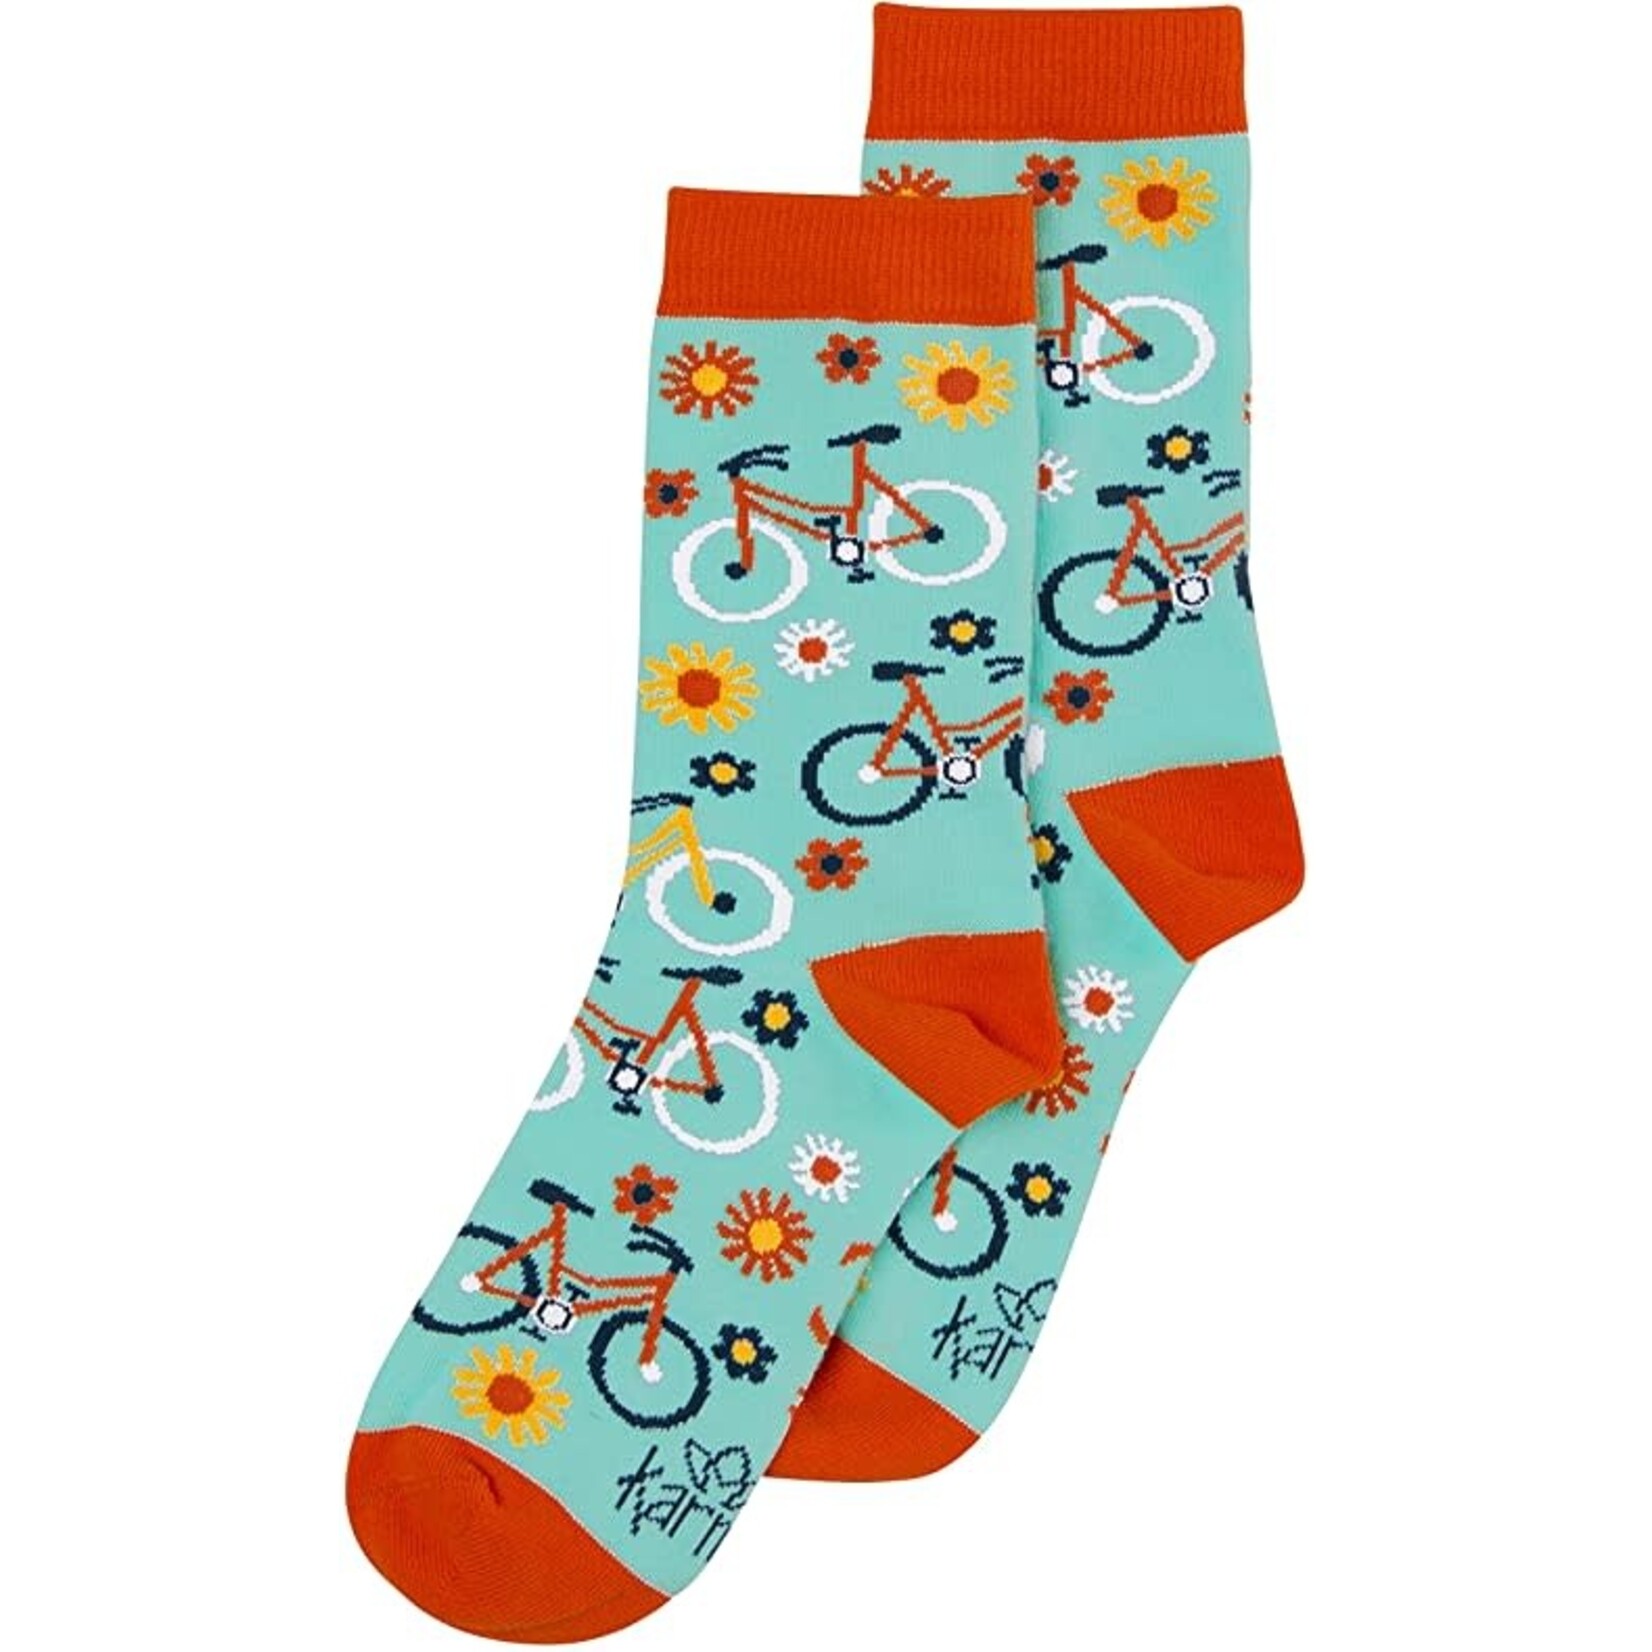 Karma Bicycle Crew Socks